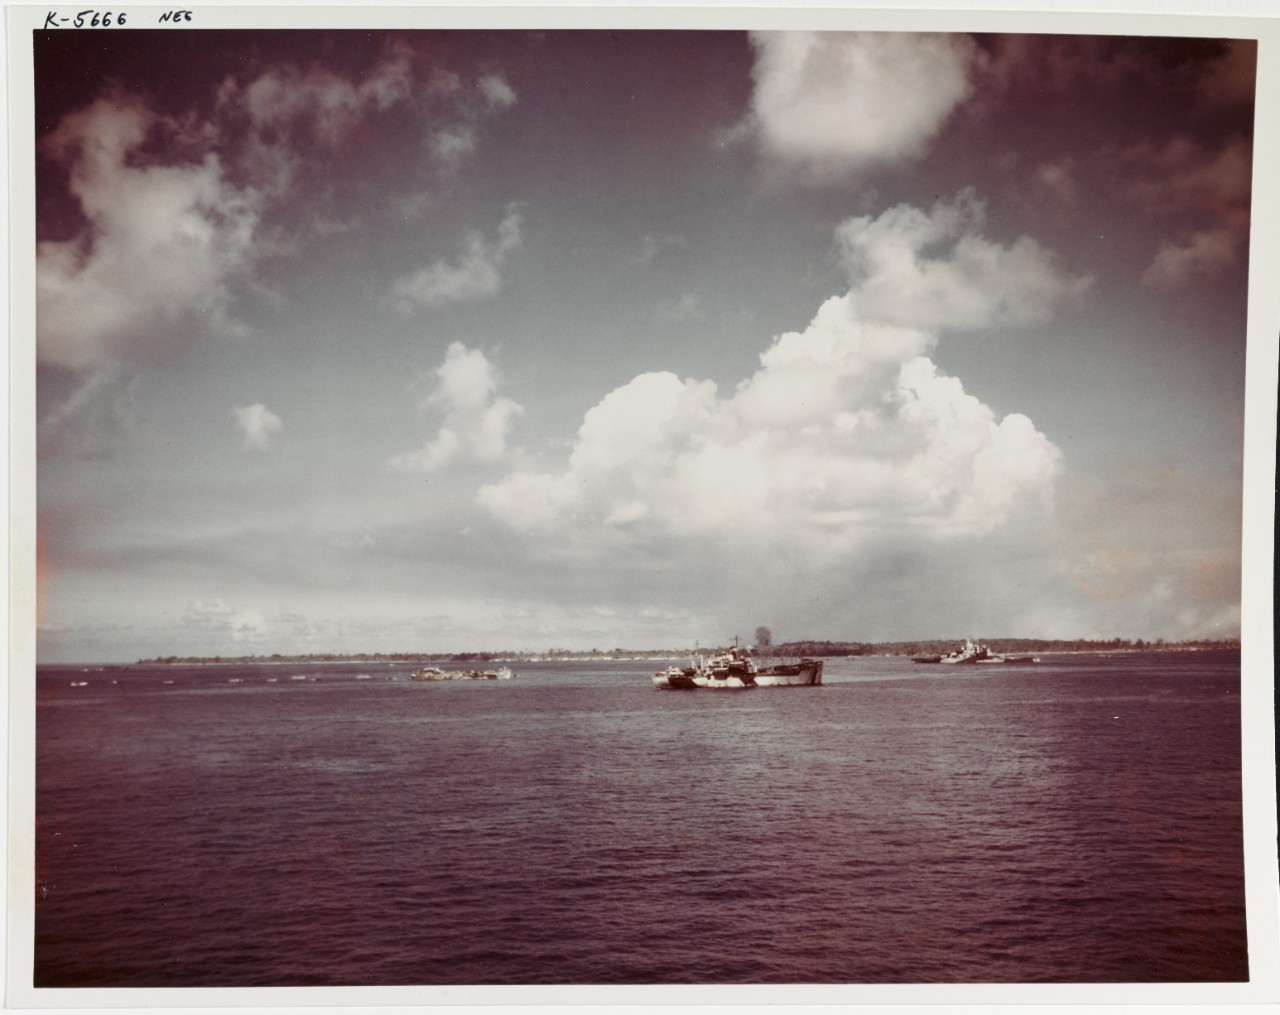 Invasion of Palau, September 1944